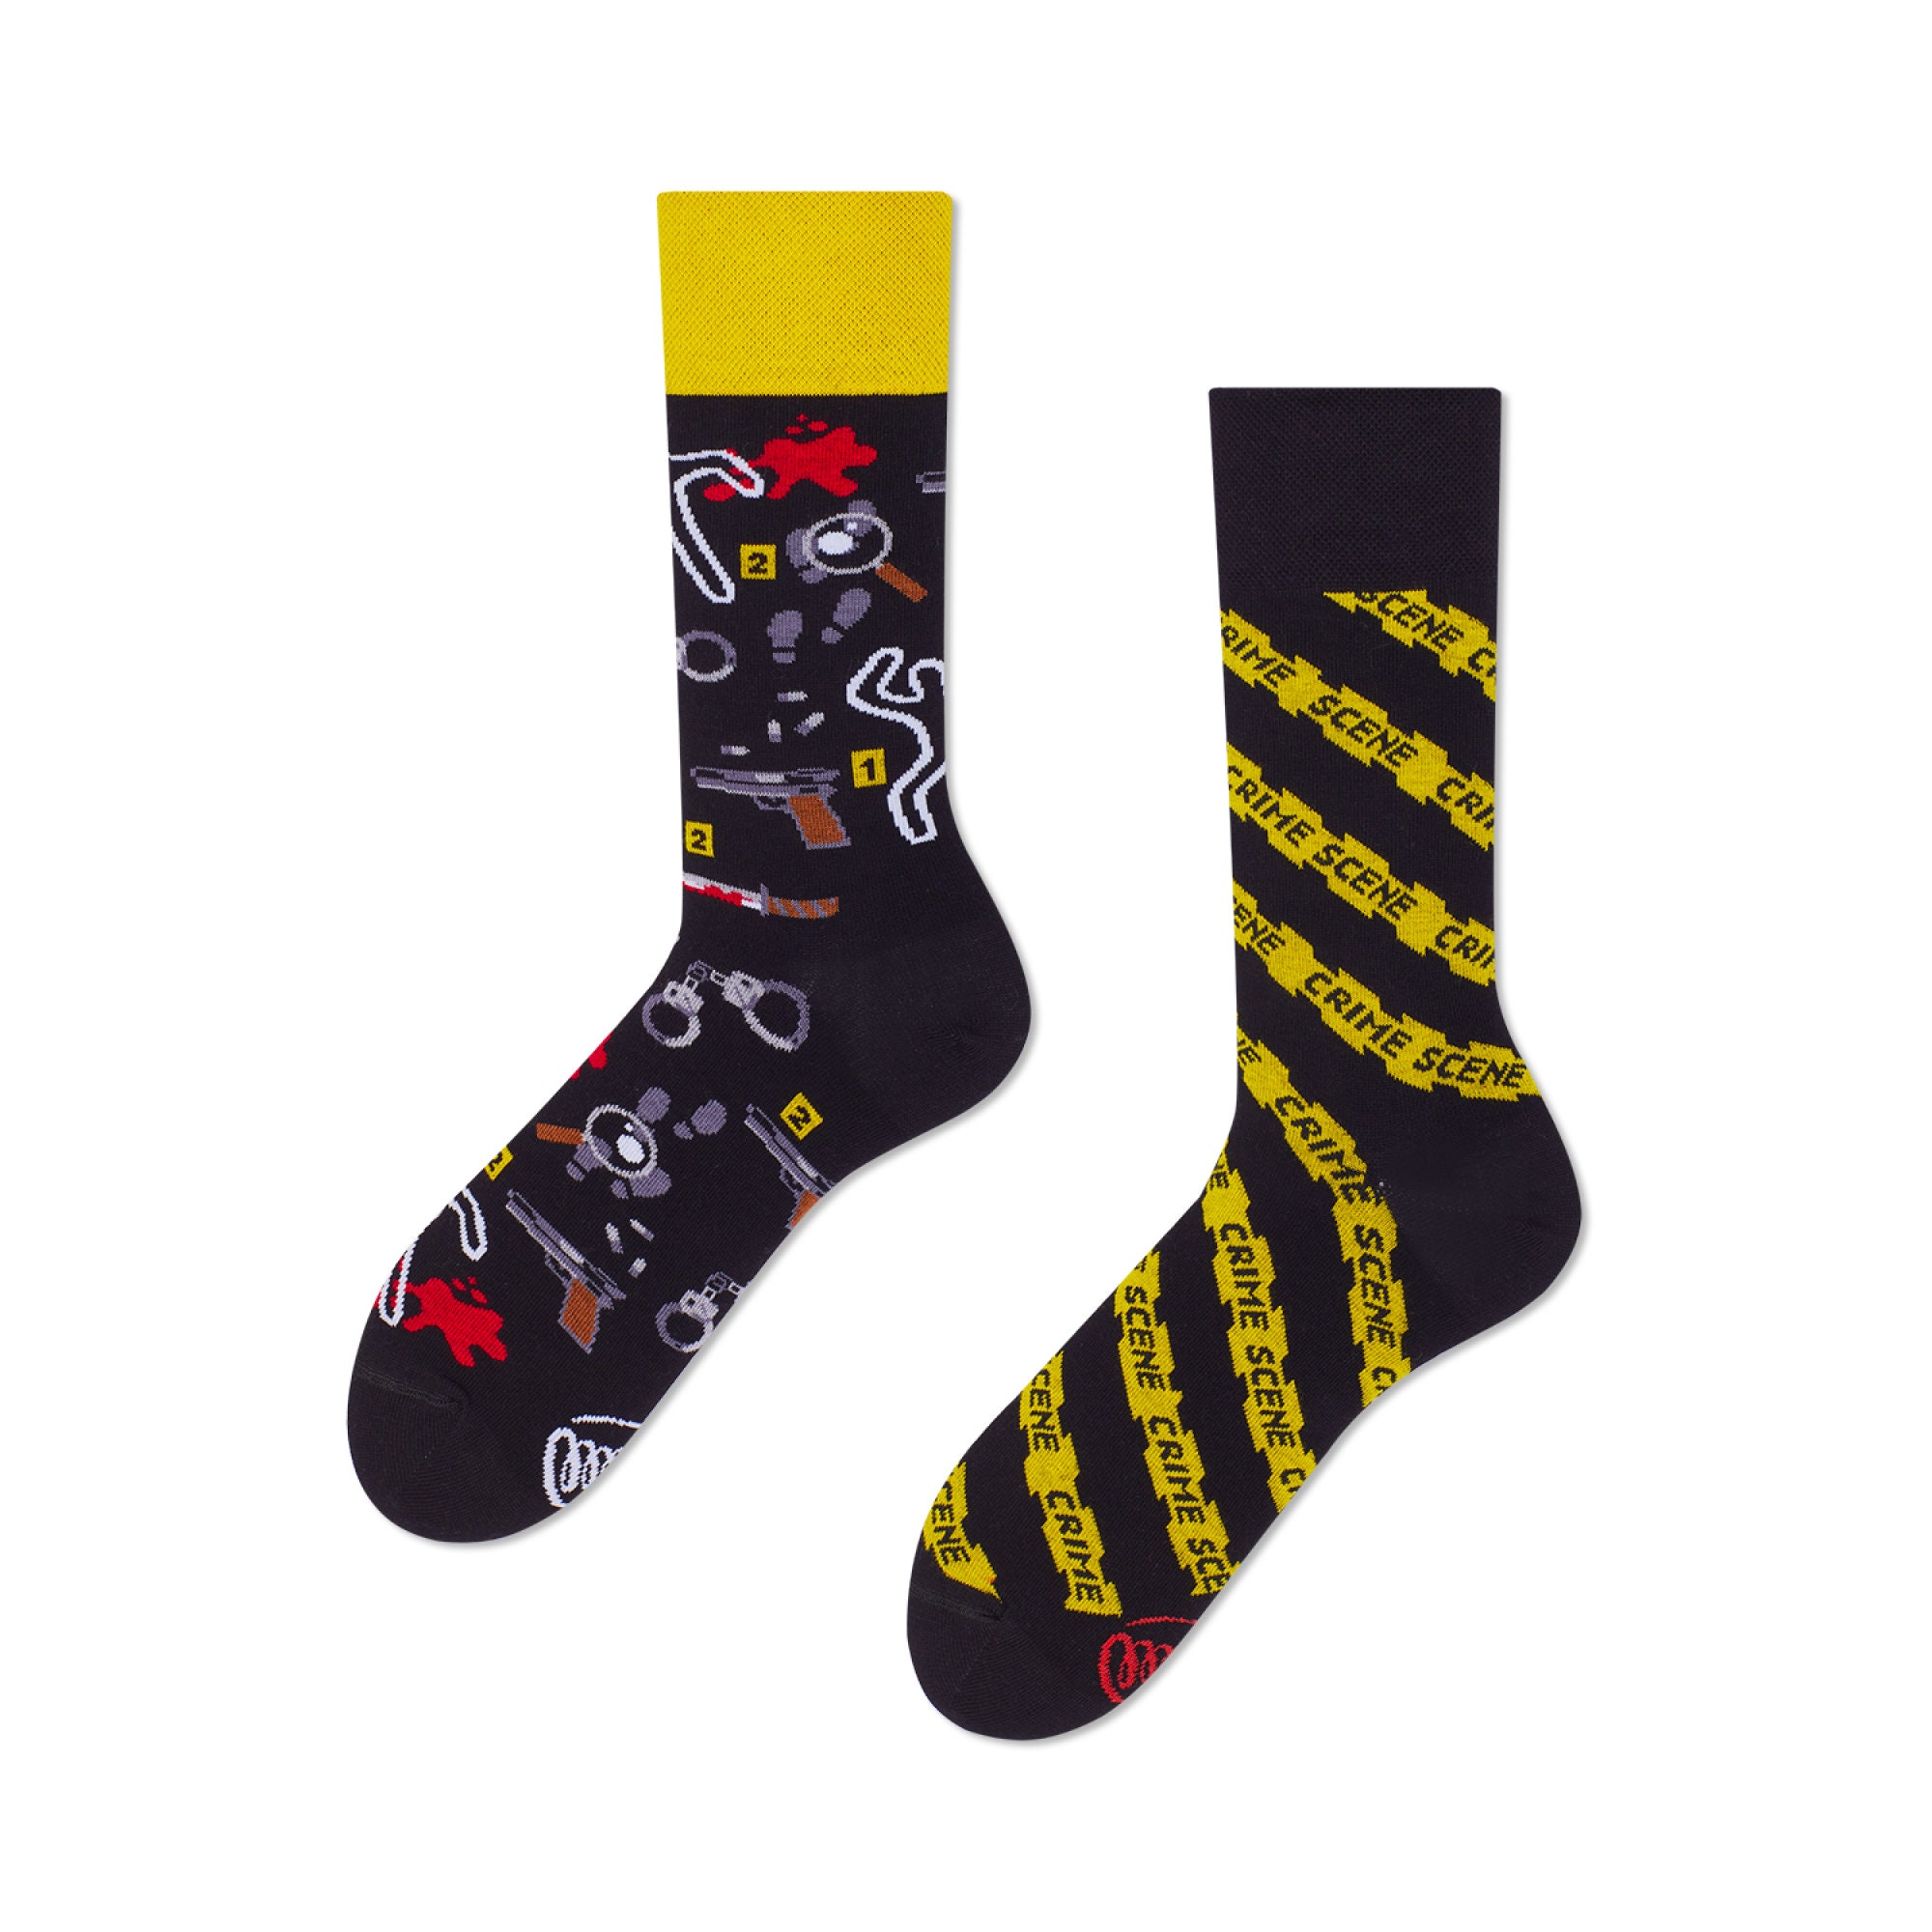 Discover Detective socks from MANY MORNINGS Socks